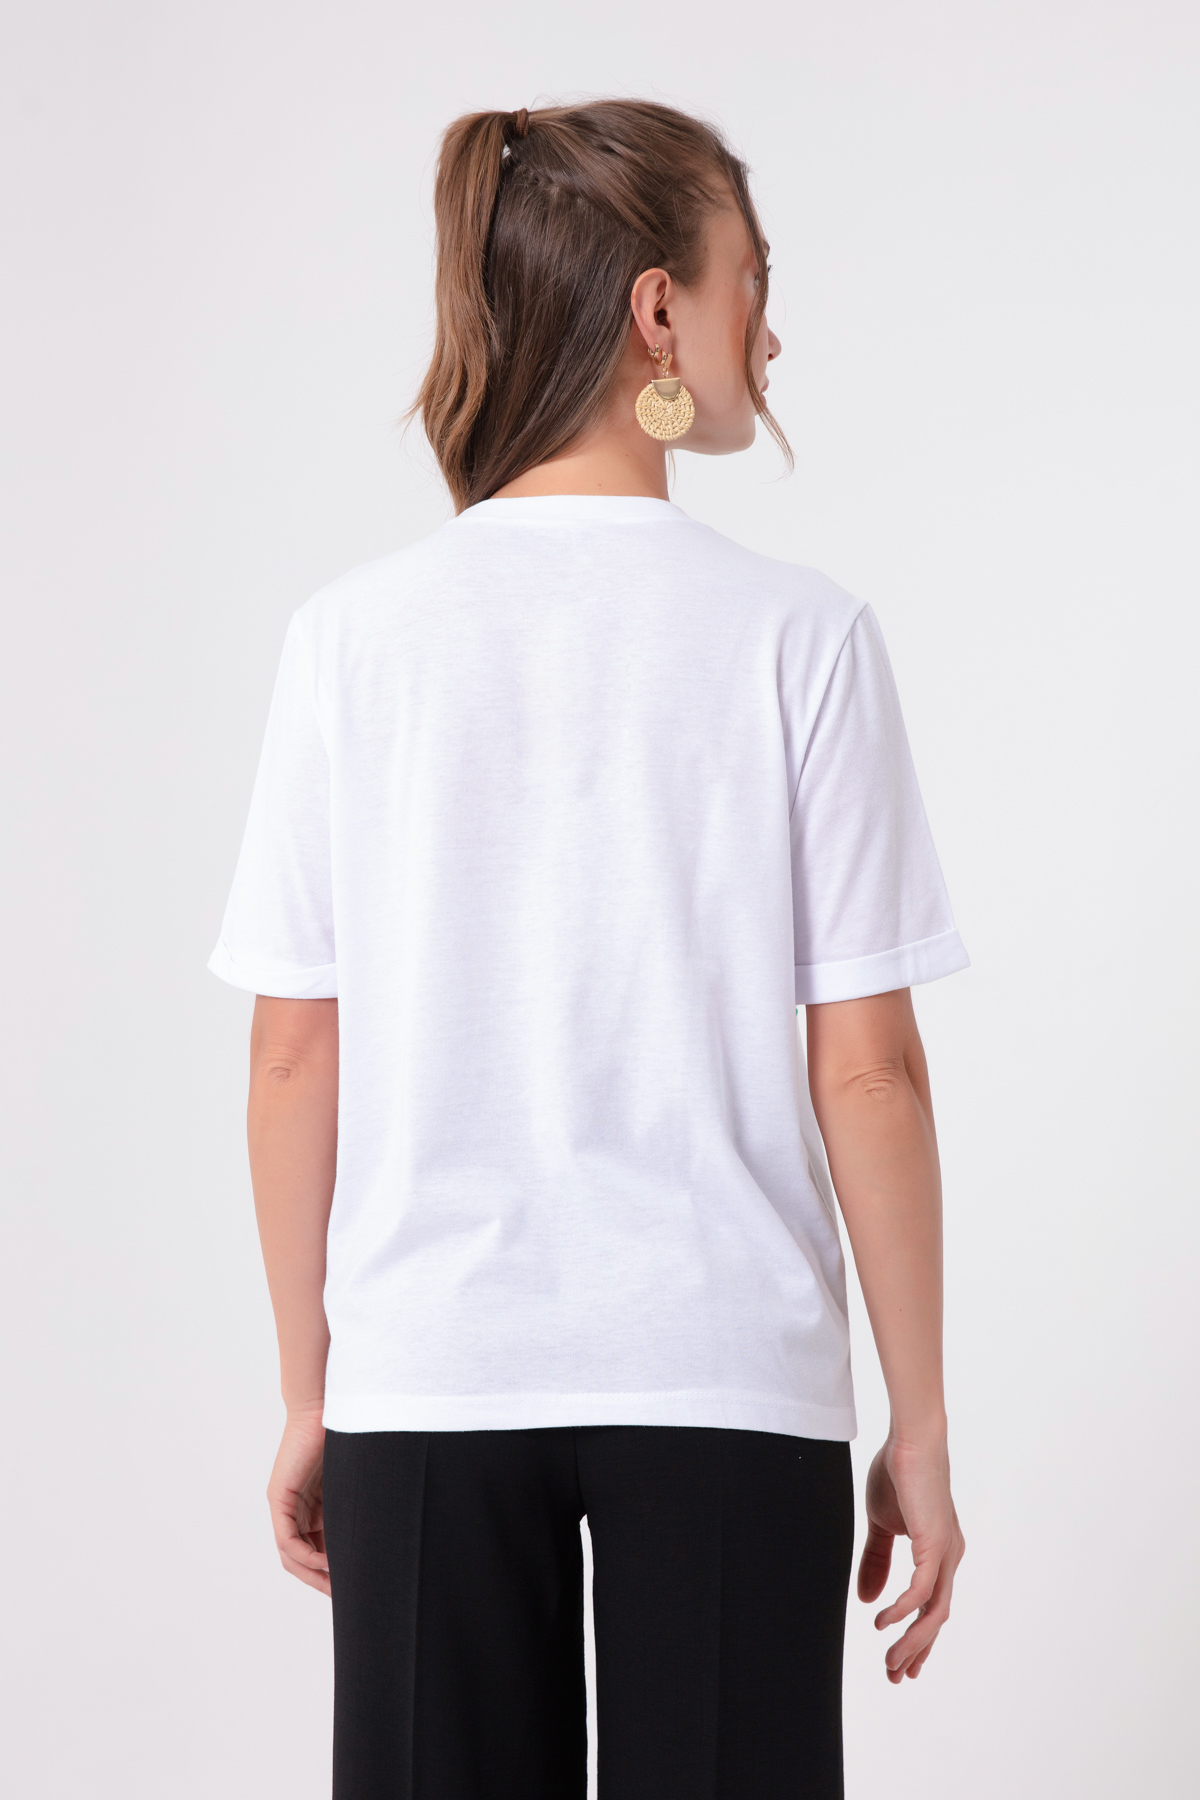 Women's White Floral T-Shirt